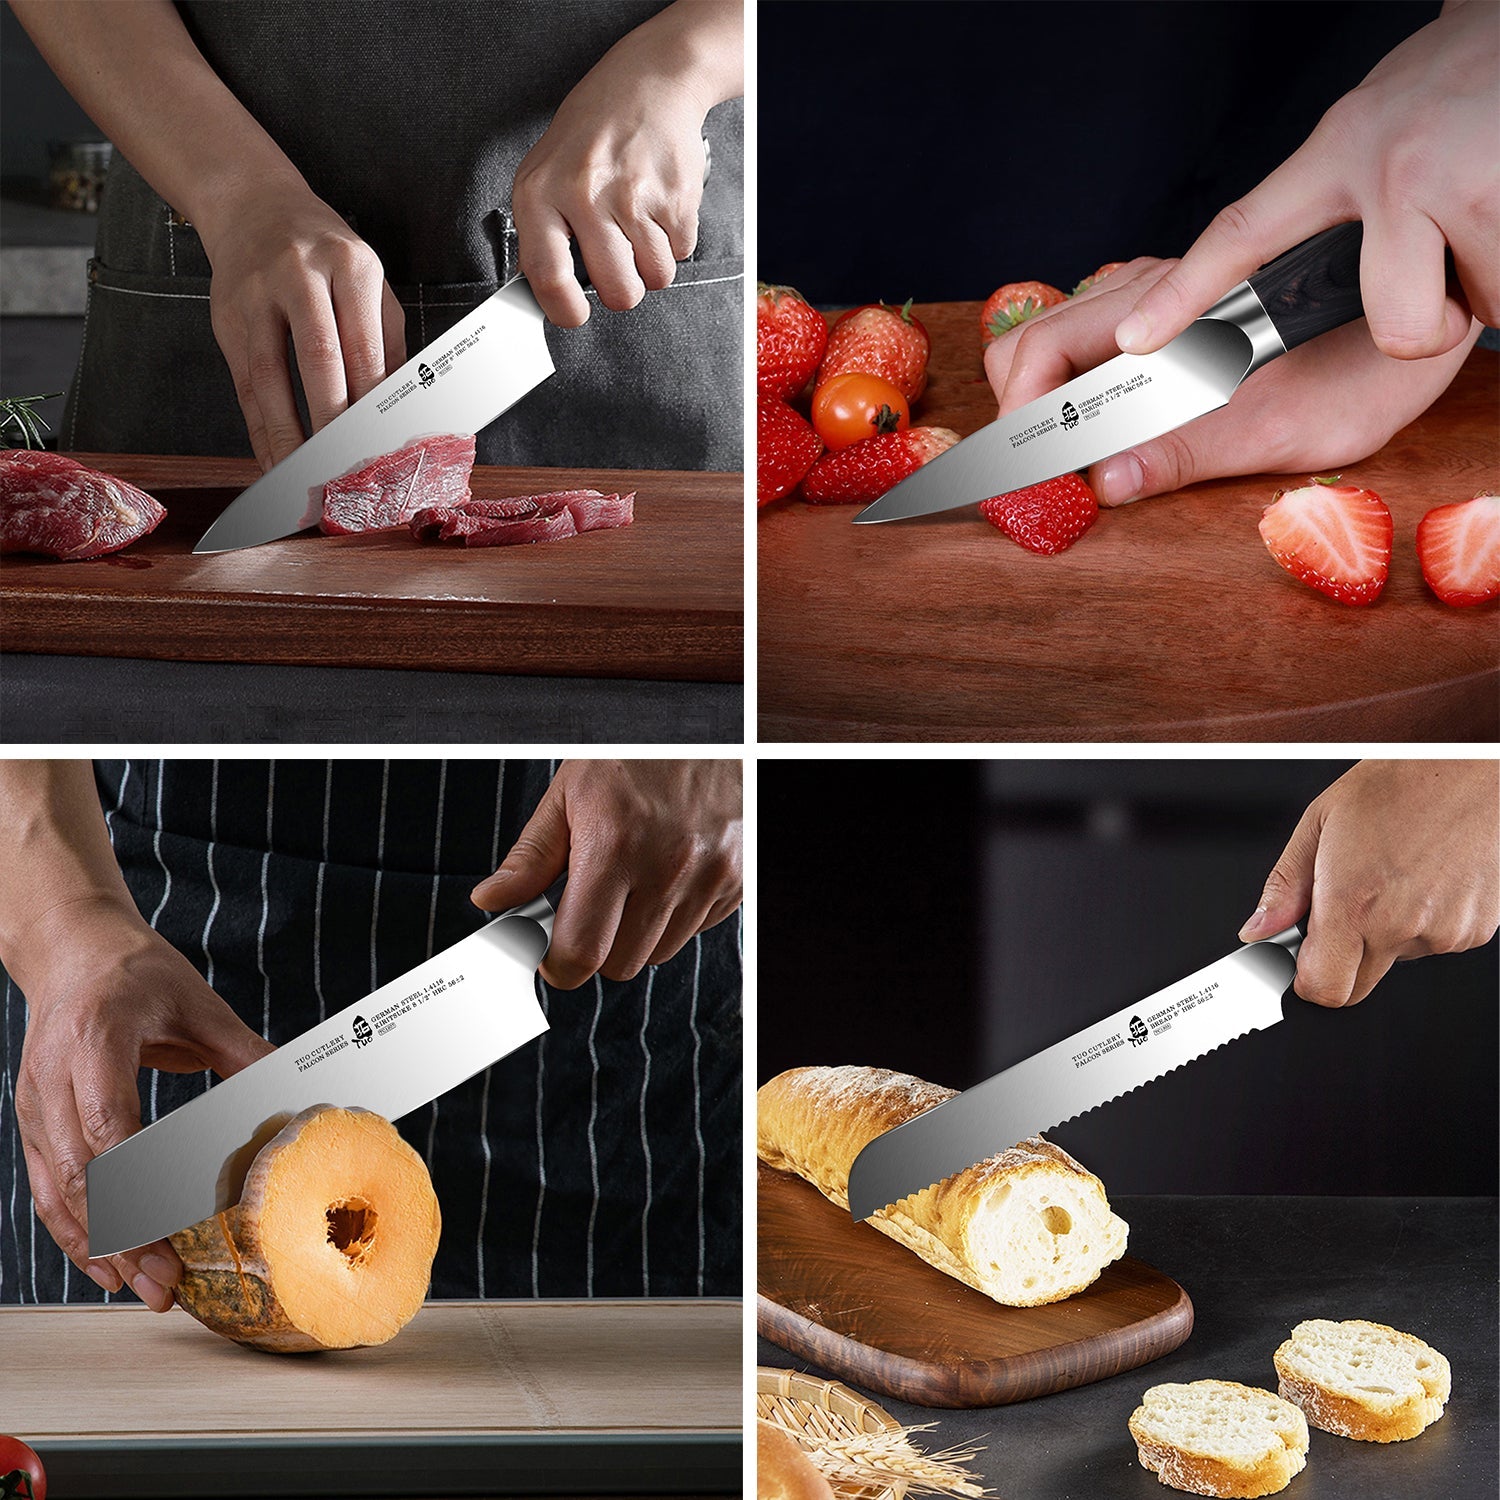 Tuo Pcs Kitchen Knives Set